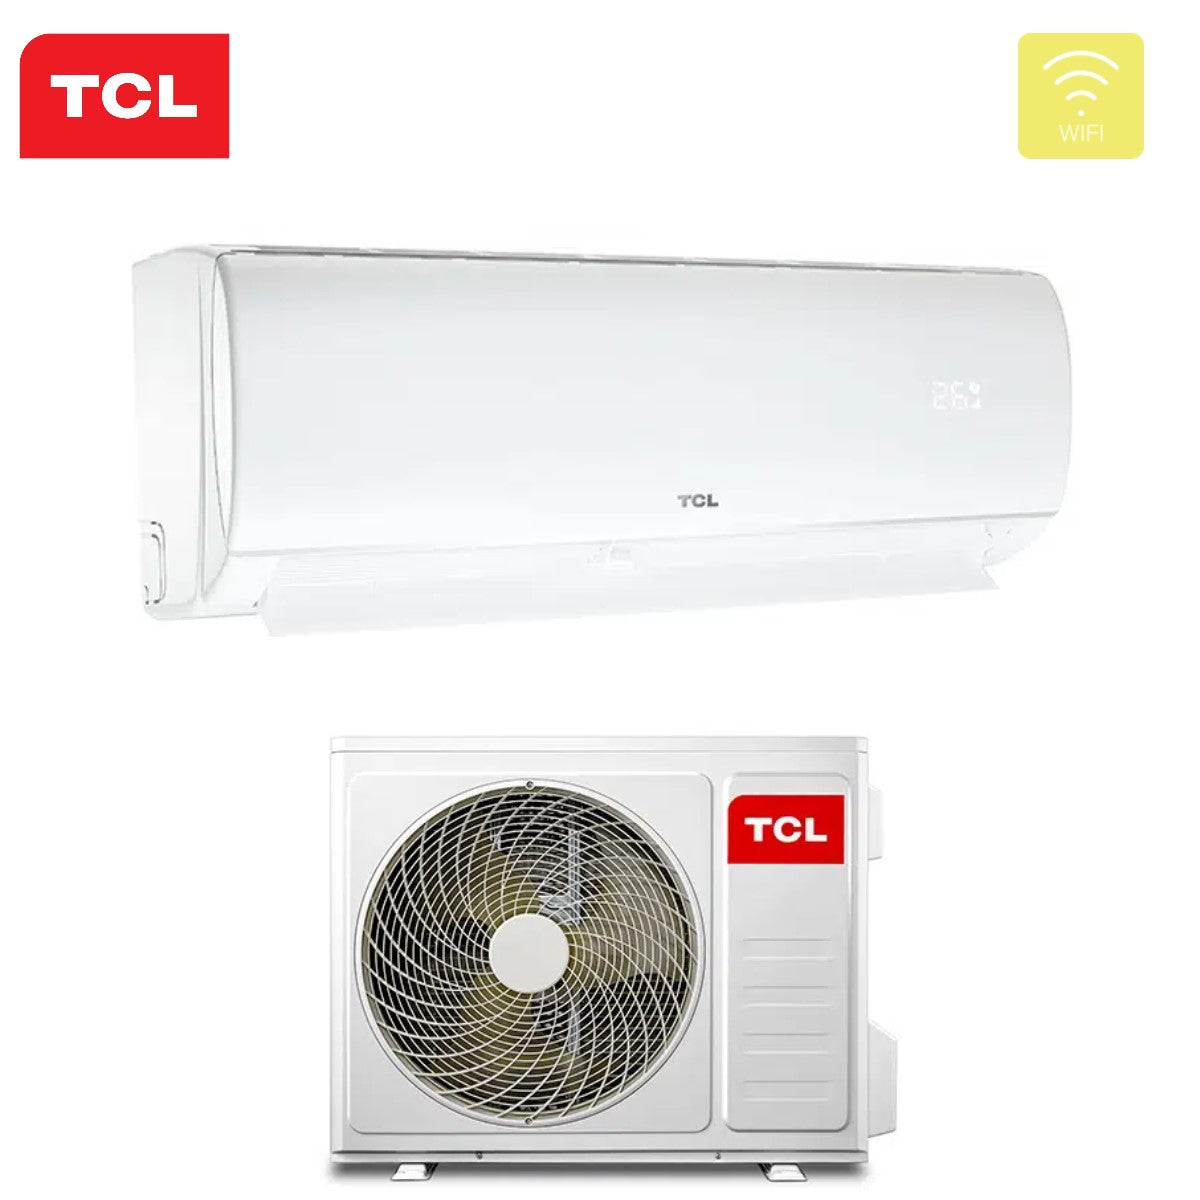 immagine-4-tcl-climatizzatore-condizionatore-tcl-inverter-serie-elite-xa41-9000-btu-tac-09chsd-r-32-wi-fi-integrato-classe-aa